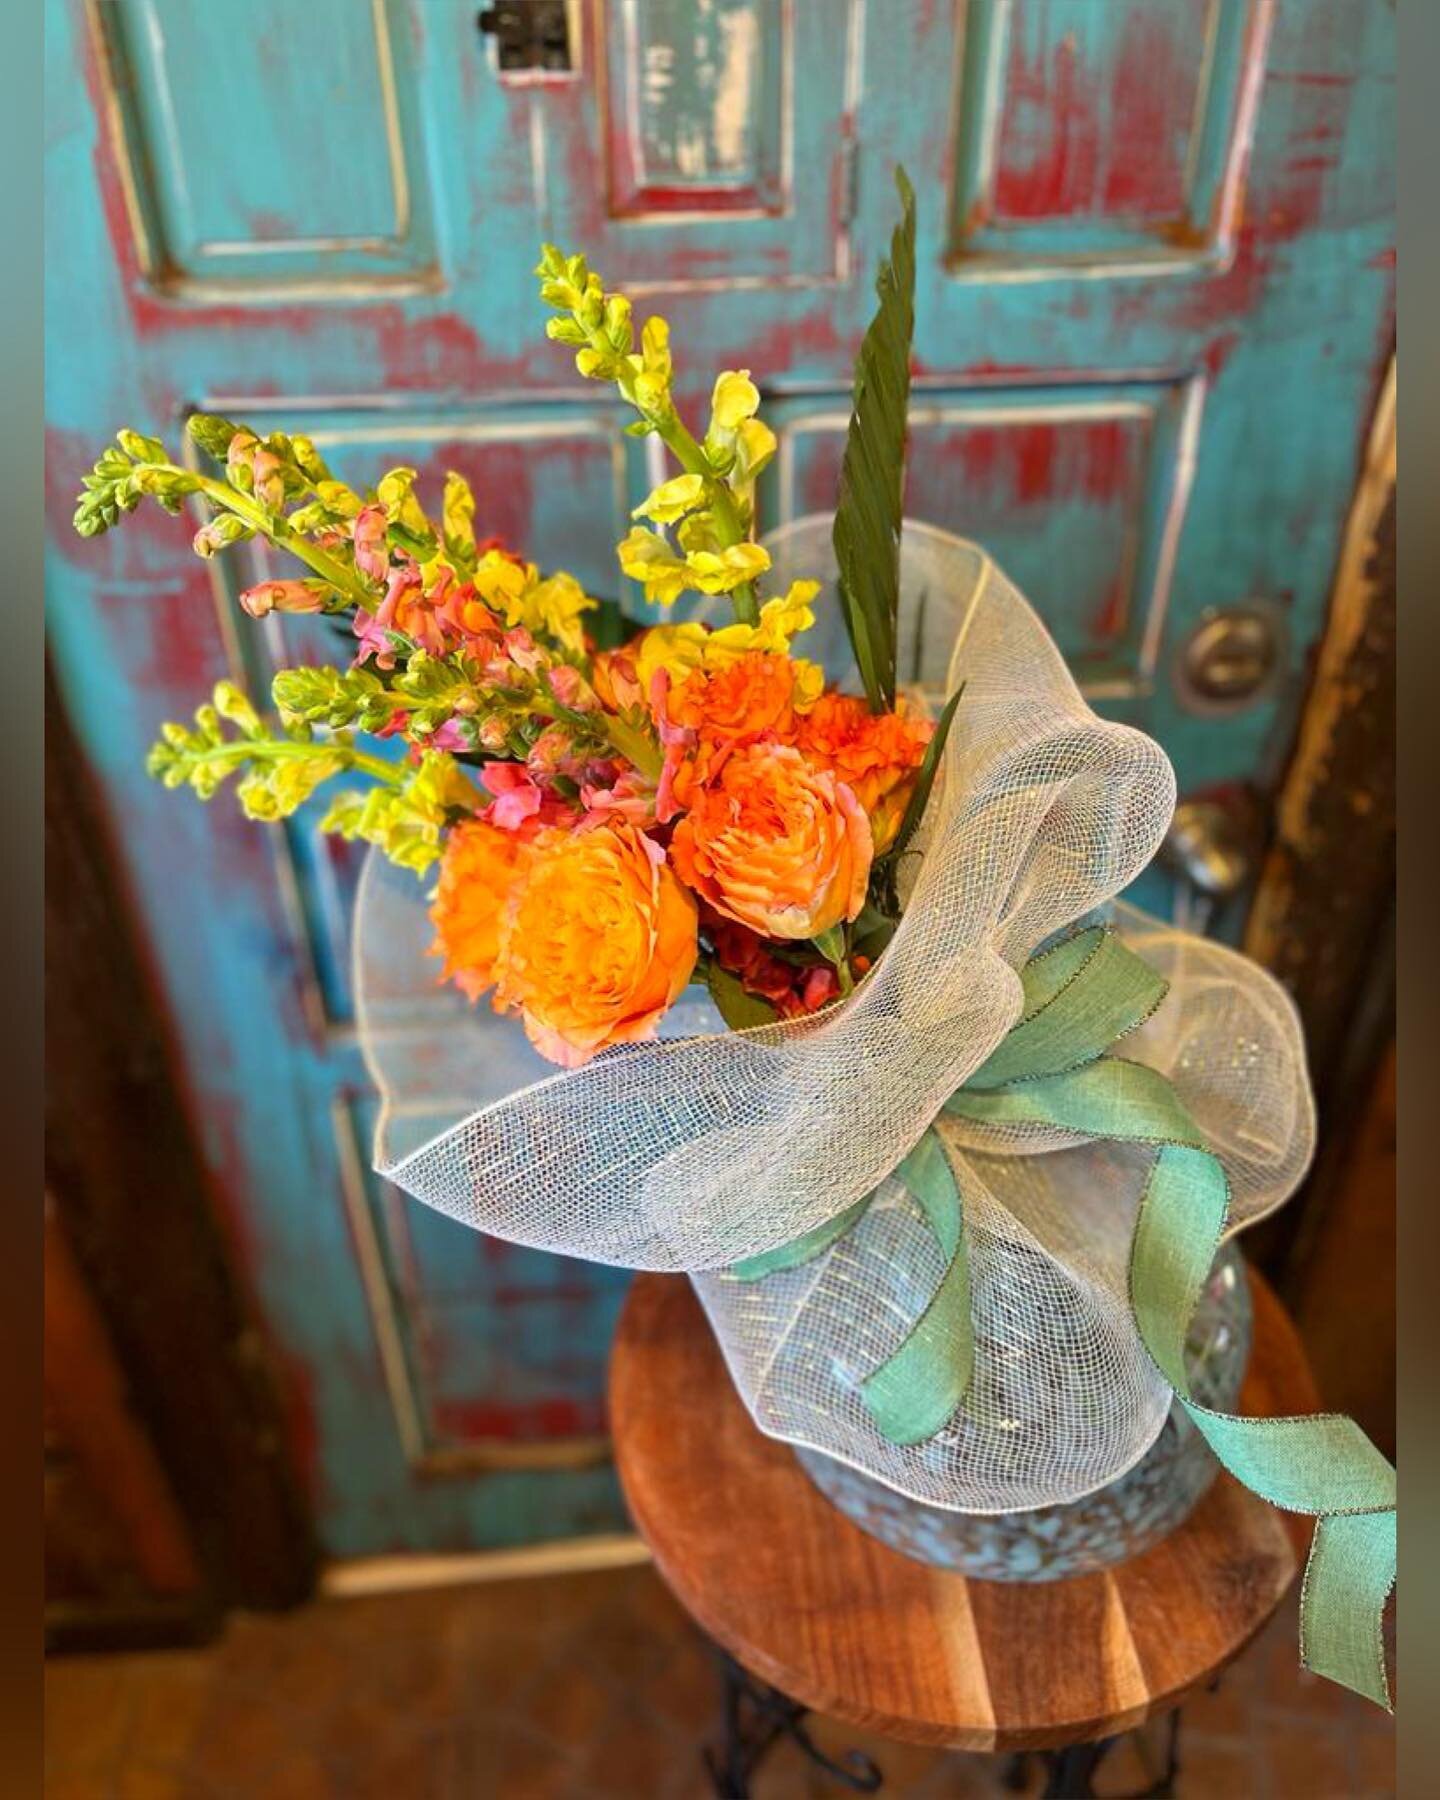 Beautiful hand tied bouquet 😍 #adoberosecustomflorist
#thankyou
#love
#elpasoflorist
#elpasotexas
#eptx
#floristsofinstagram
#floristry
#florist
#flowershop
#flowers
#floral
#freshflowers
#eventflowers